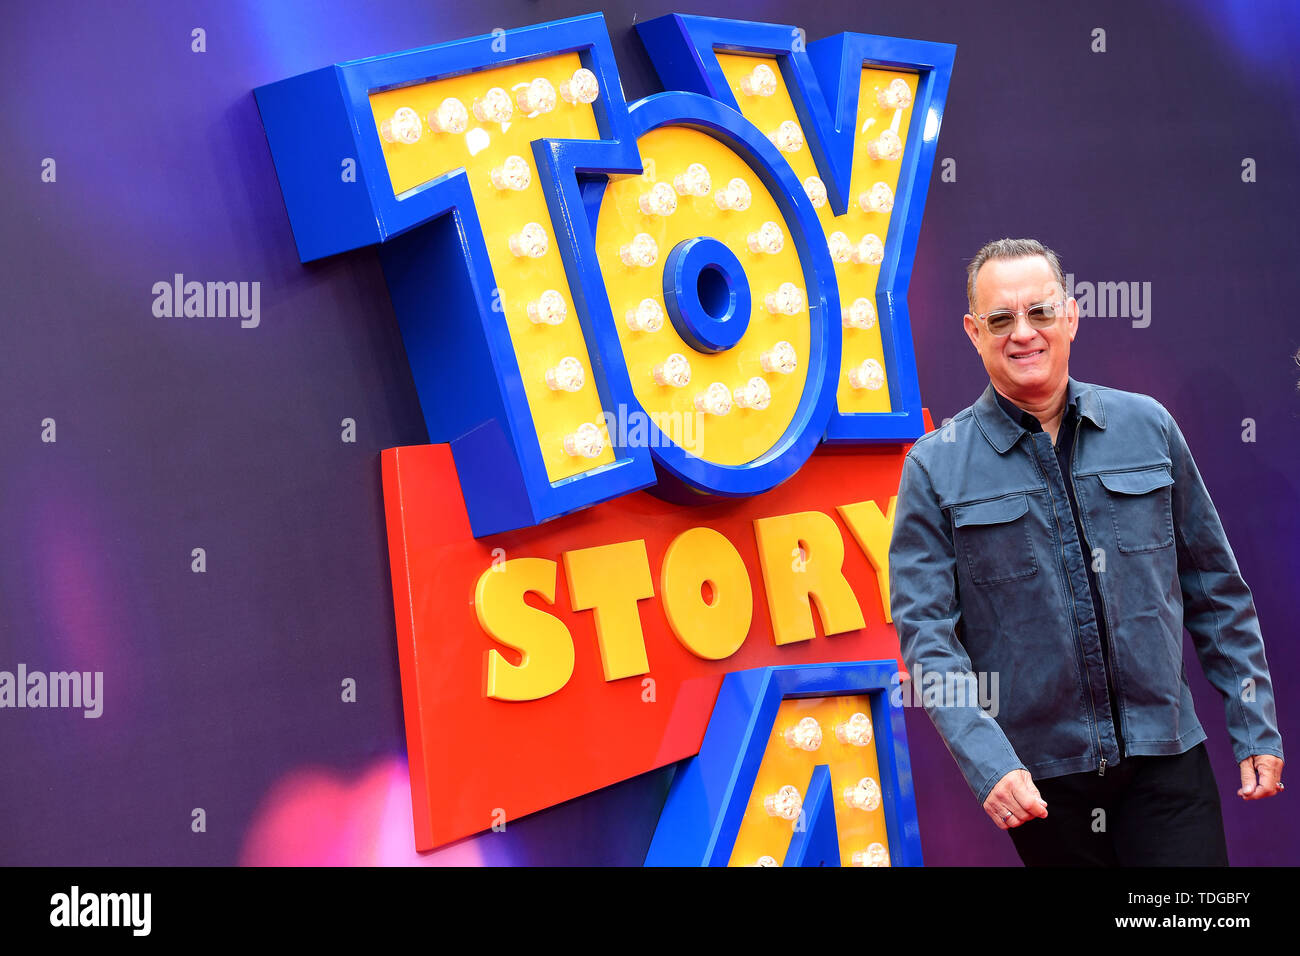 Tom Hanks frequentando il Toy Story 4 Premiere di Odeon Luxe, Leicester Square, Londra. Foto Stock